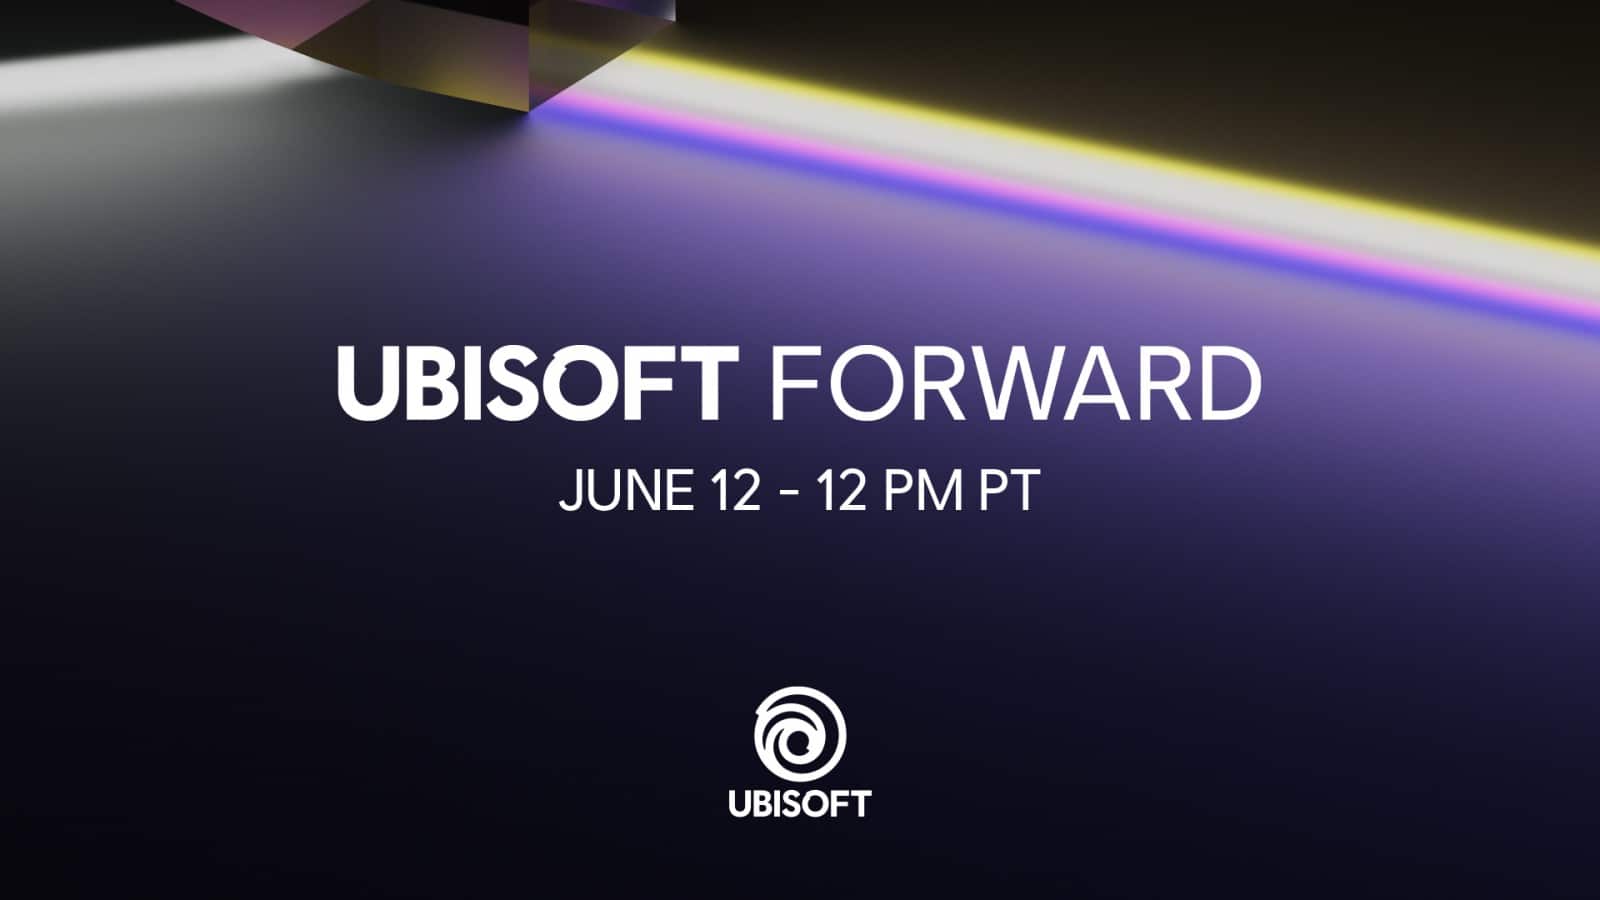 Ubisoft Forward, GamersRD